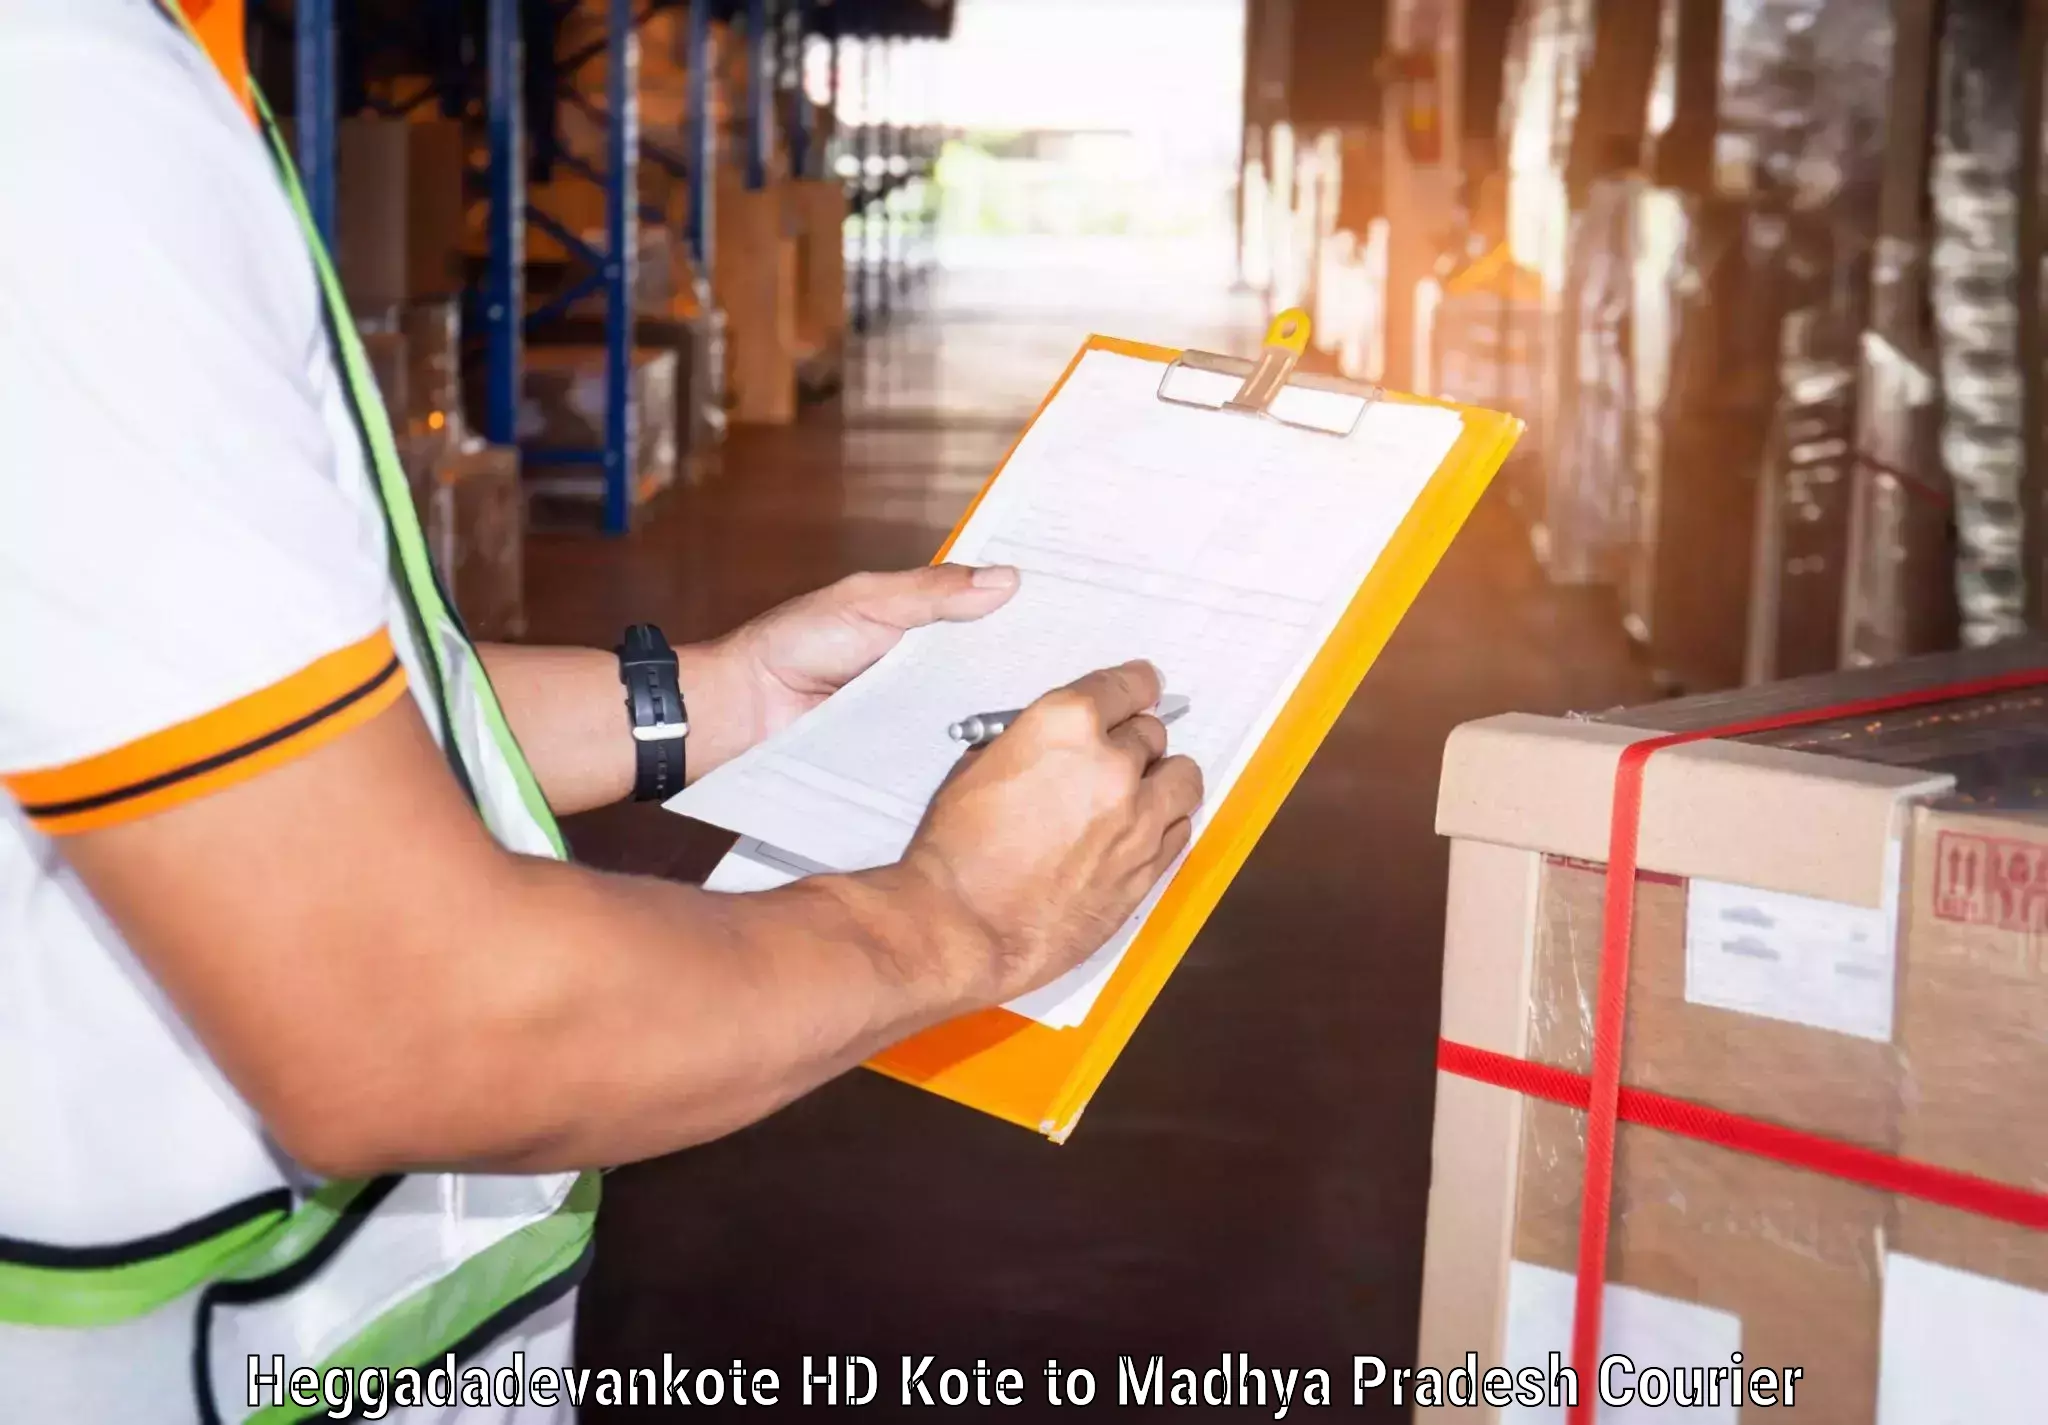 Custom courier packages Heggadadevankote HD Kote to Kotma